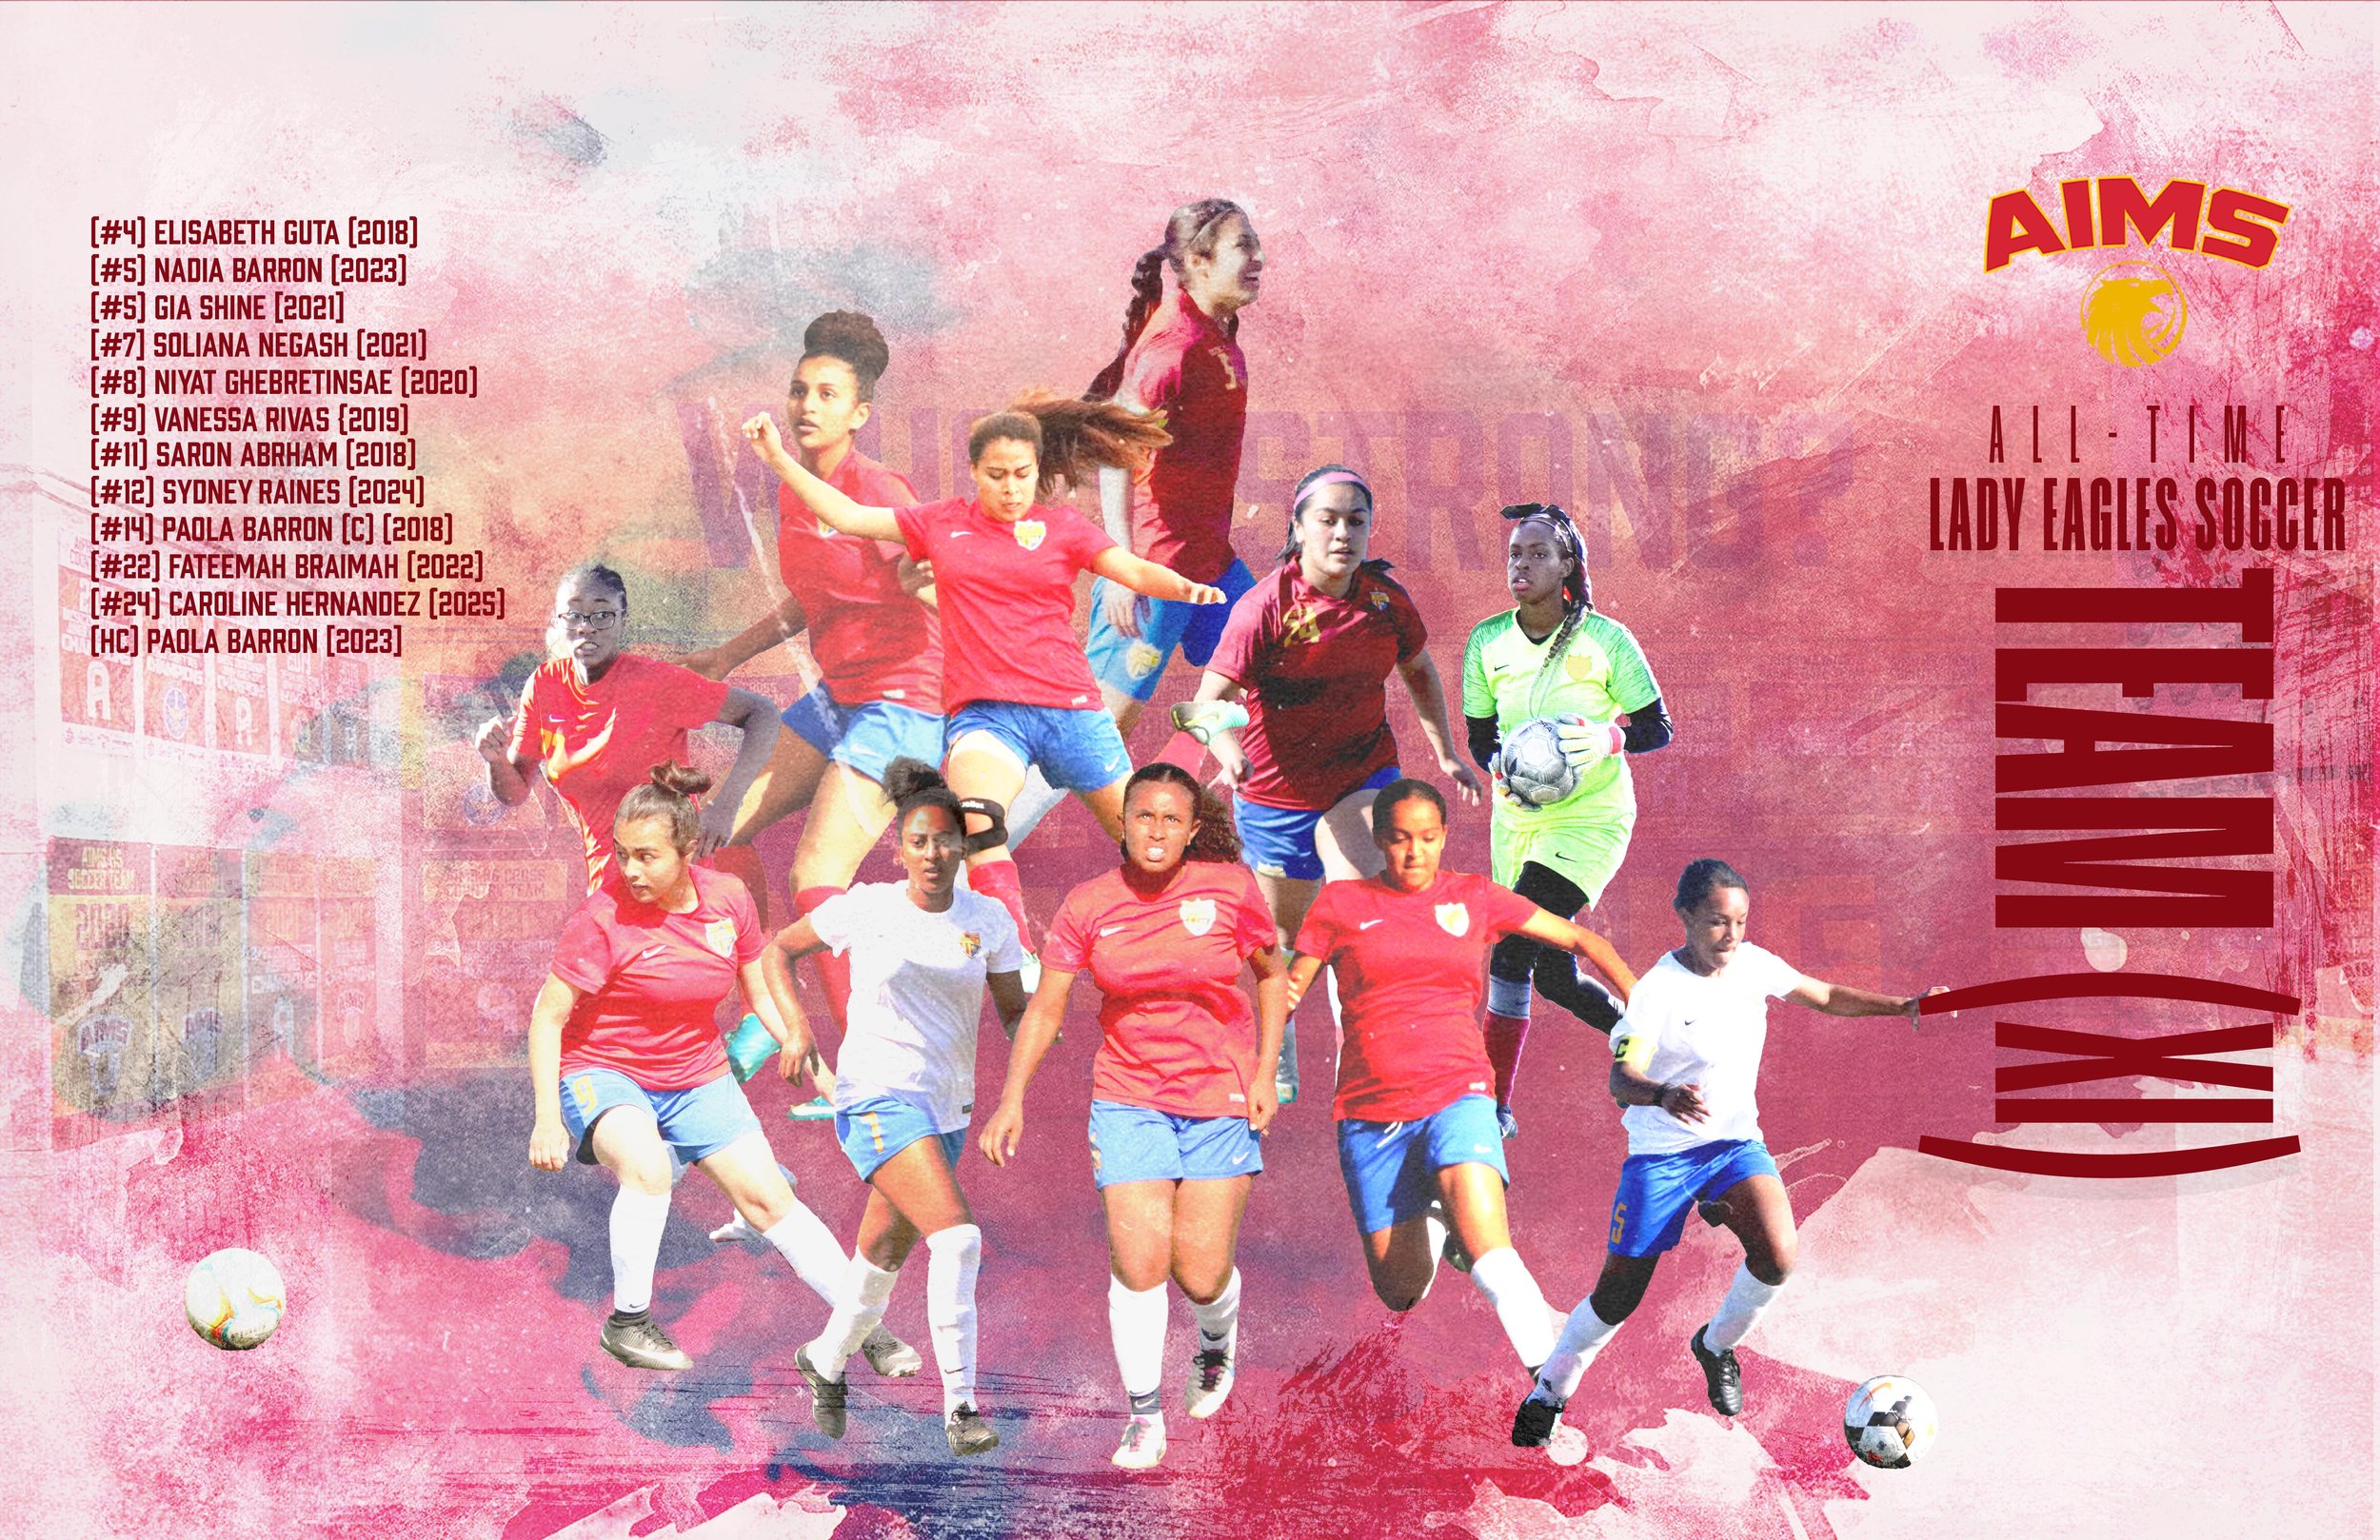   All-Time Lady Eagles Soccer Team:  (#4) Elisabeth Guta (2018), (#5) Nadia&nbsp;Barron&nbsp;(2023), (#5) Gia Shine (2021), (#7) Soliana Negash (2021), (#8) Niyat Ghebretinsae (2020), (#9) Vanessa Rivas (2019), (#11) Saron Abraham (2018), (#12) Sydne